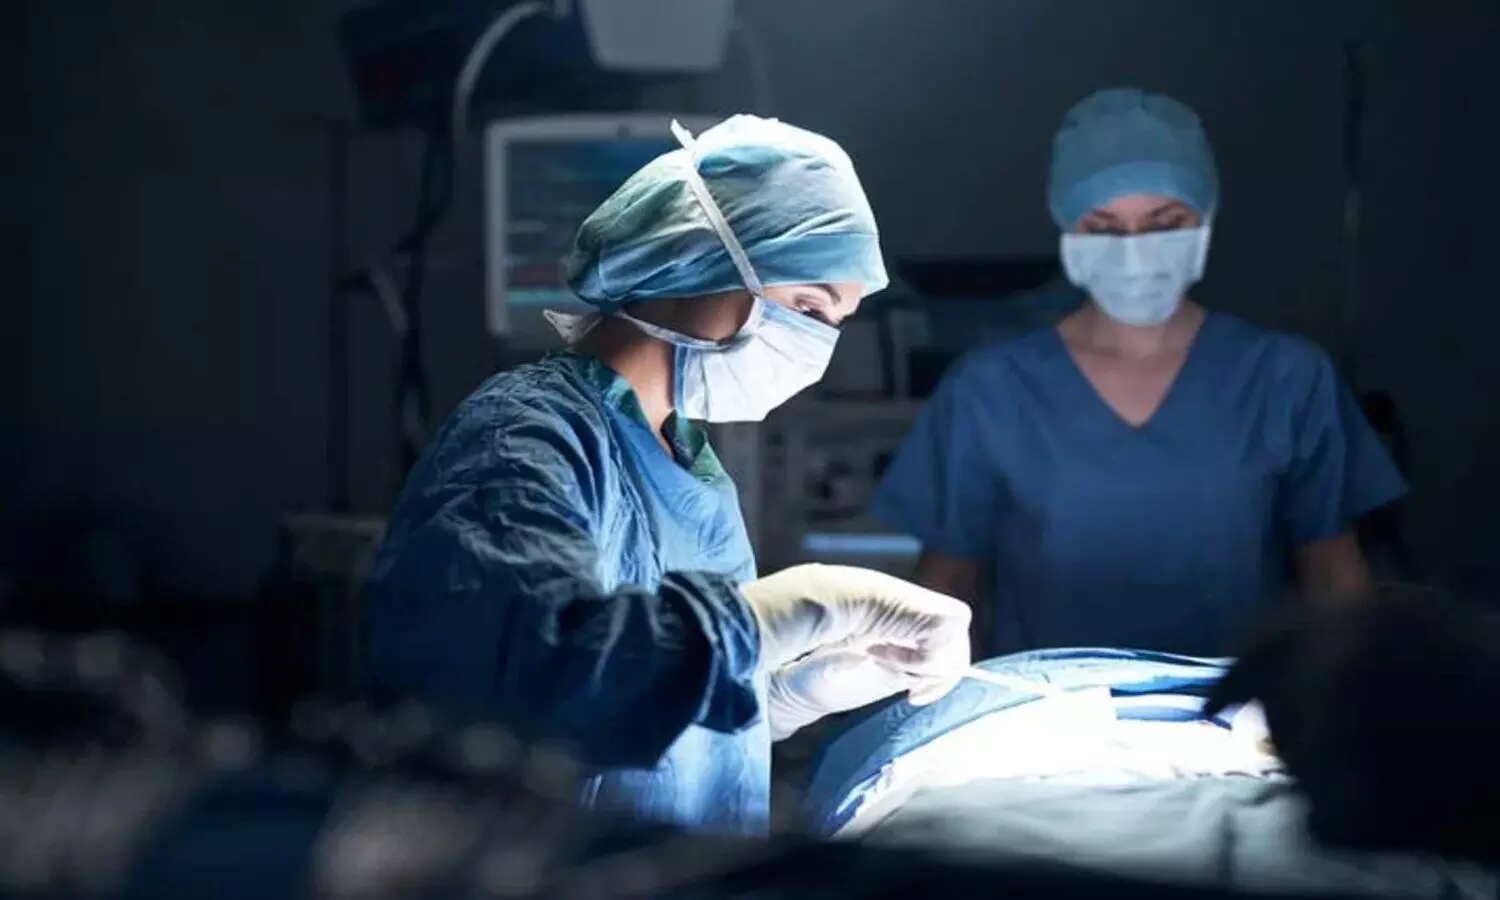 Women surgeons better outcomes